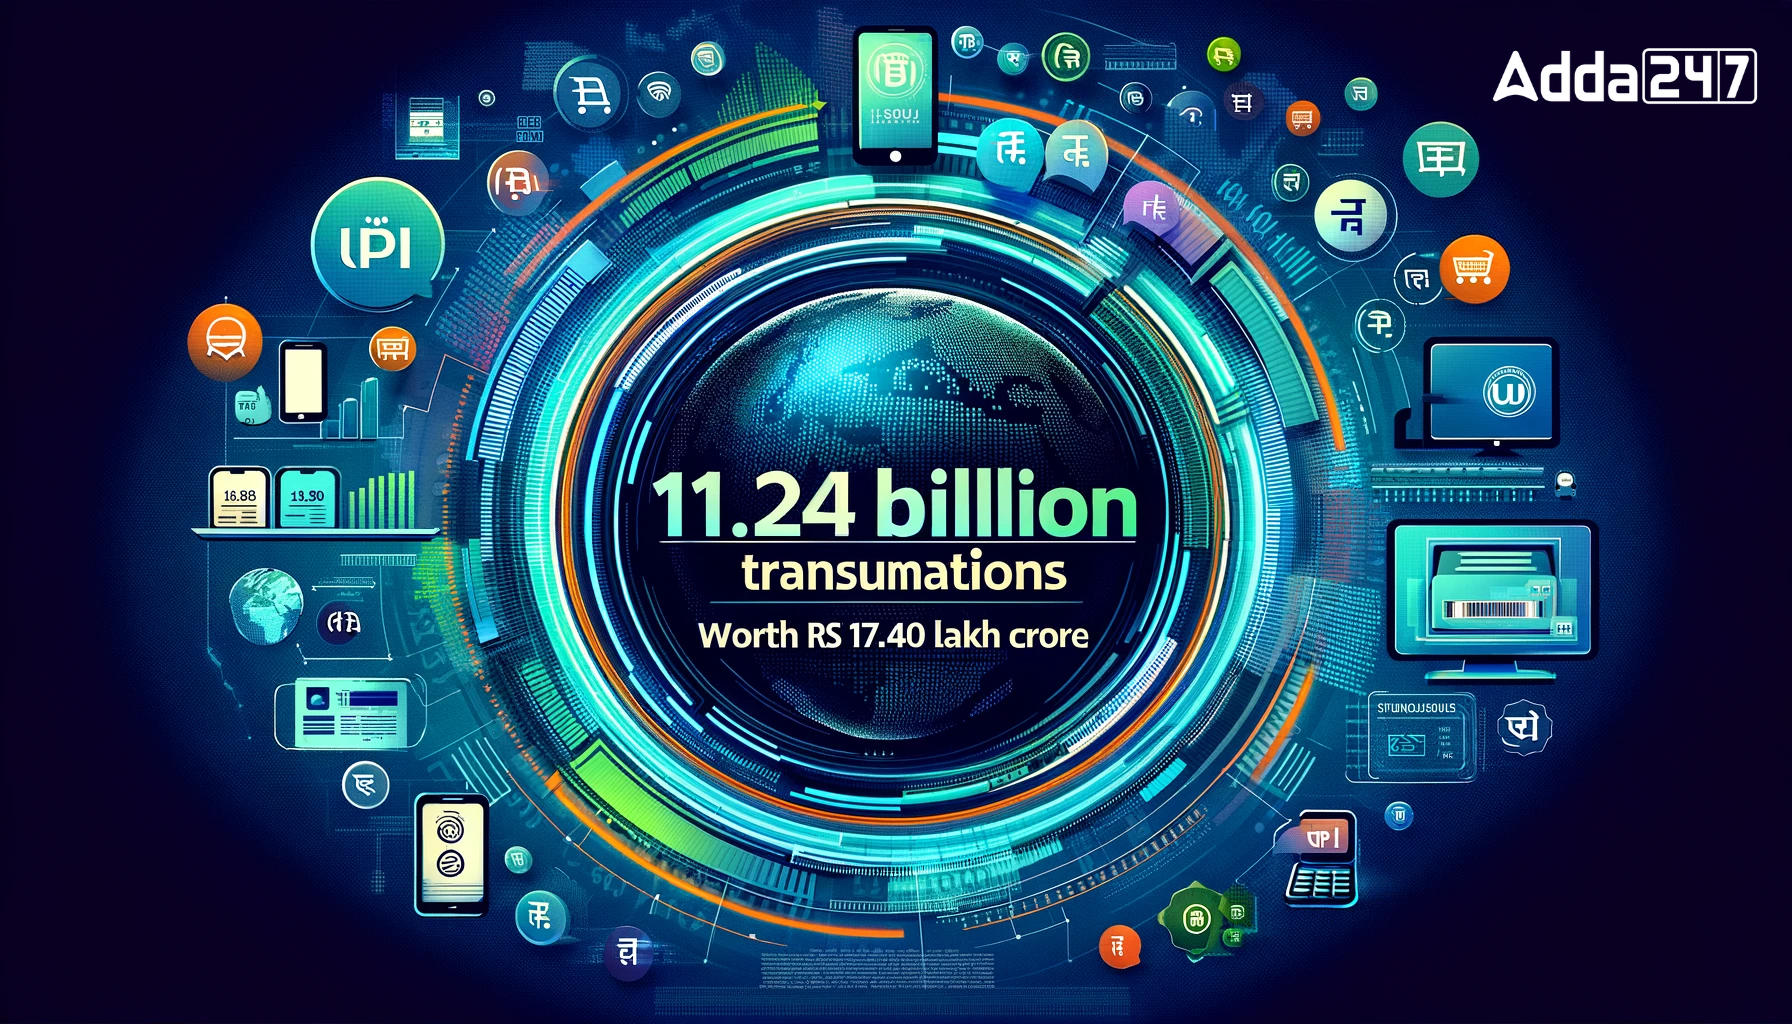 UPI recorded 11.24 billion transactions worth Rs 17.40 lakh crore